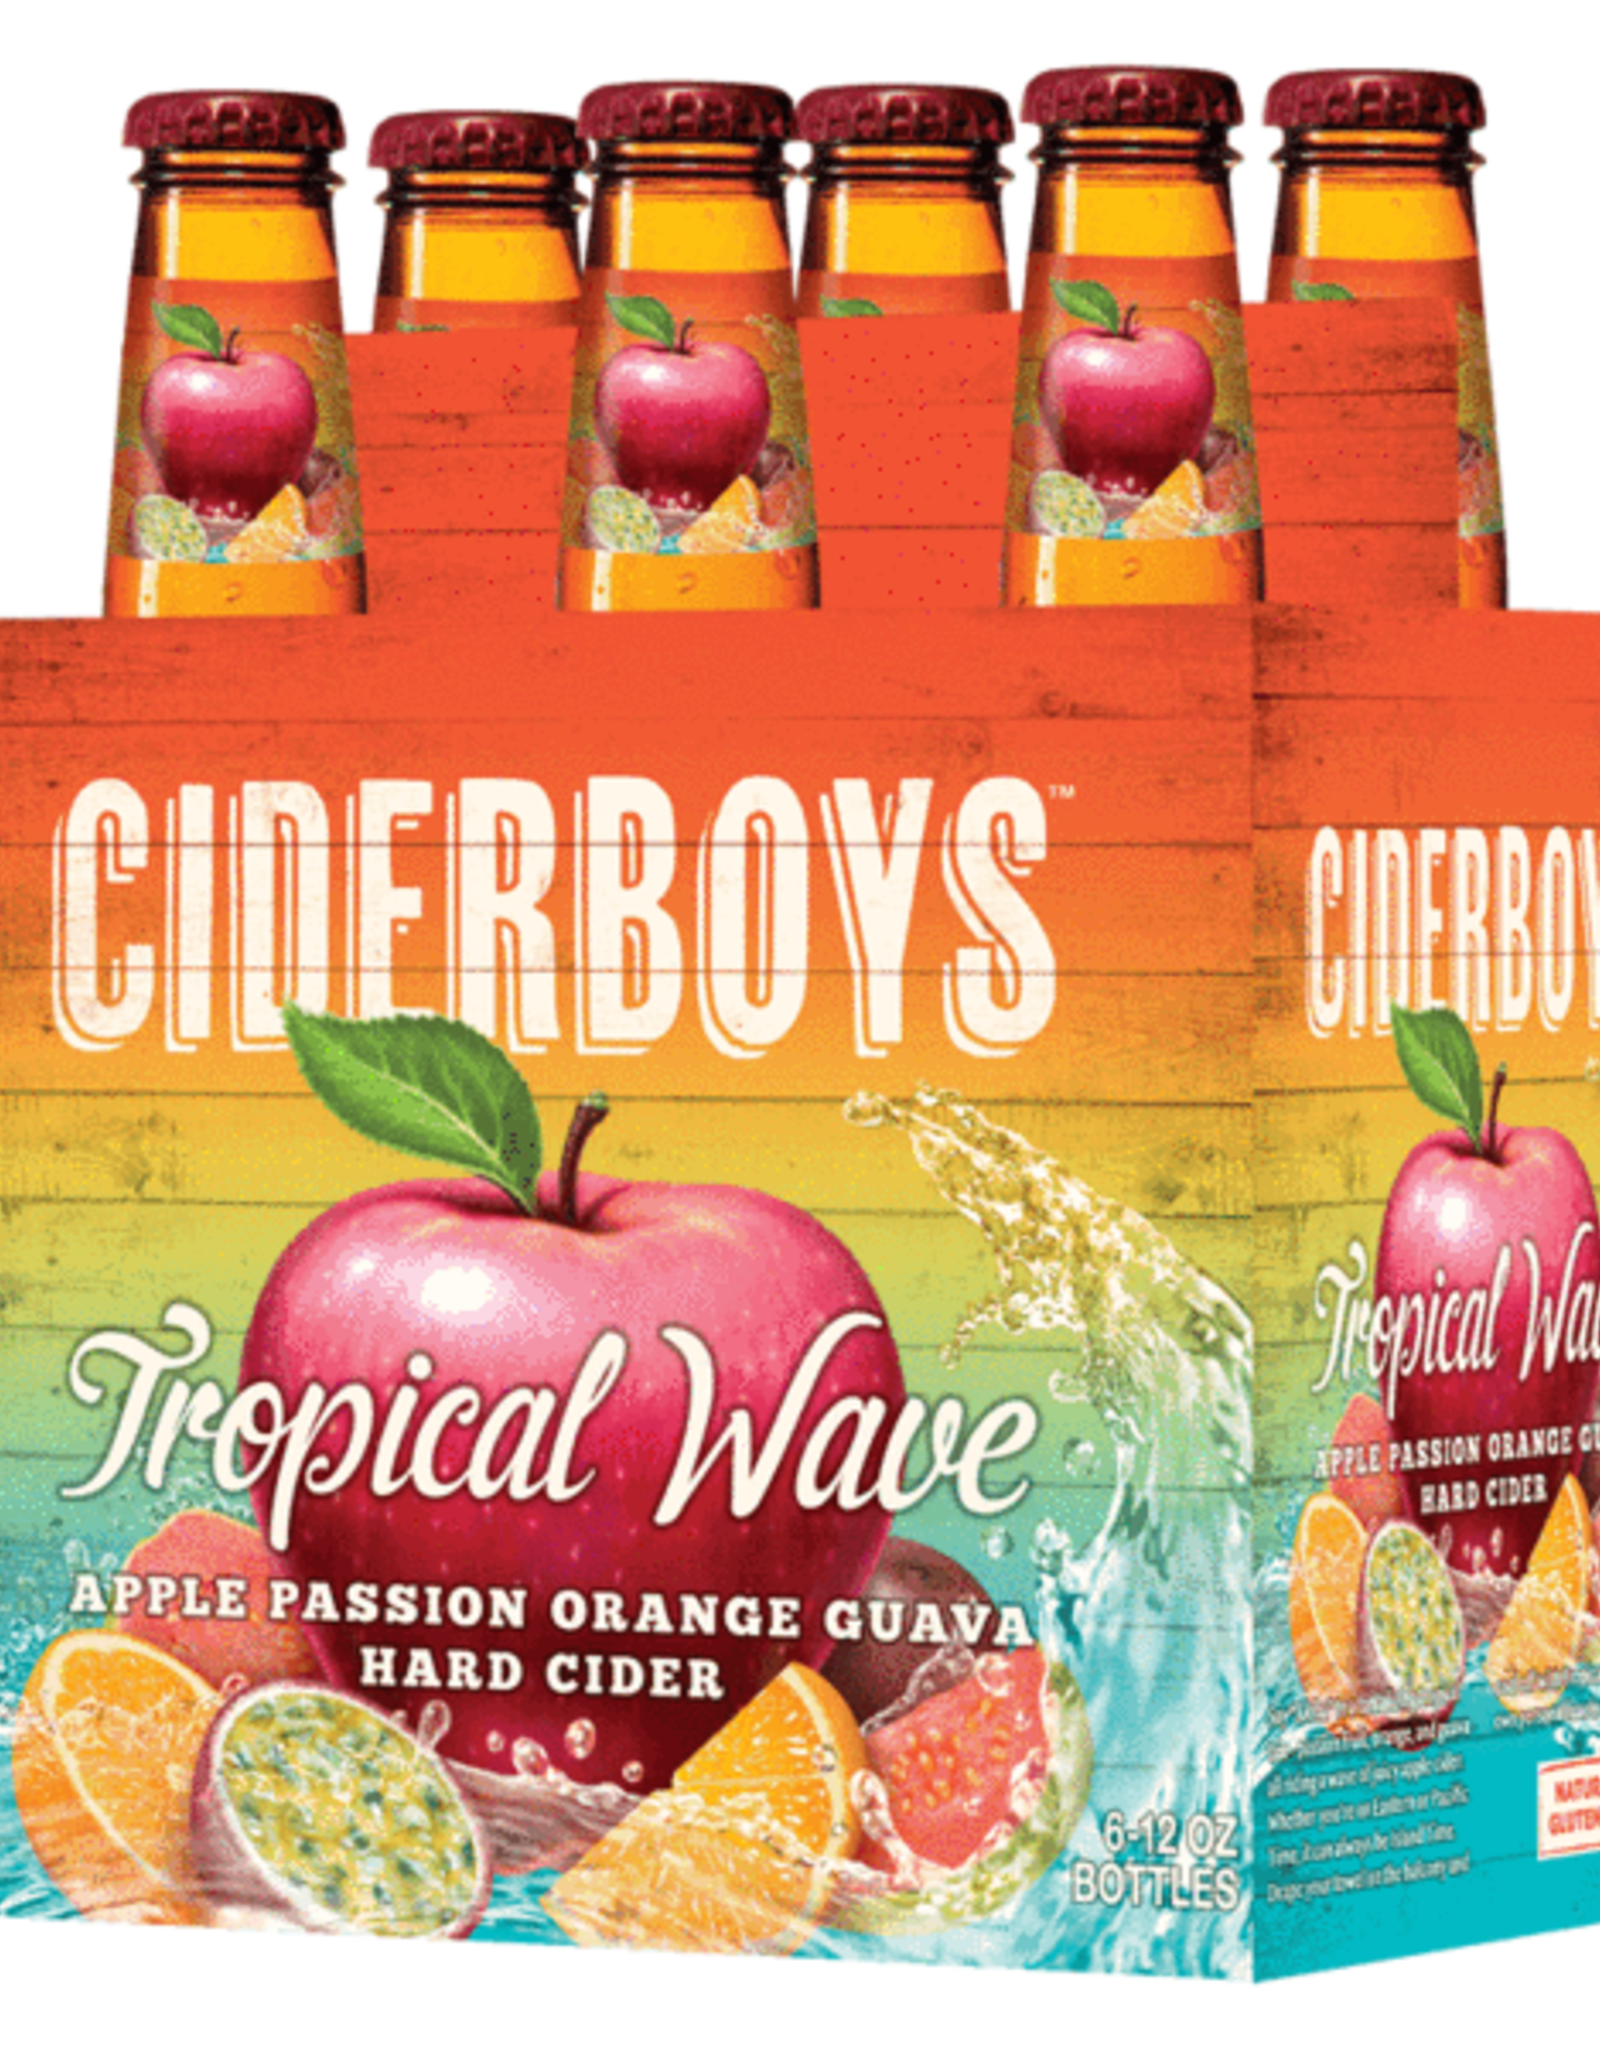 Ciderboy's Ciderboy's Tropical  6 Pack